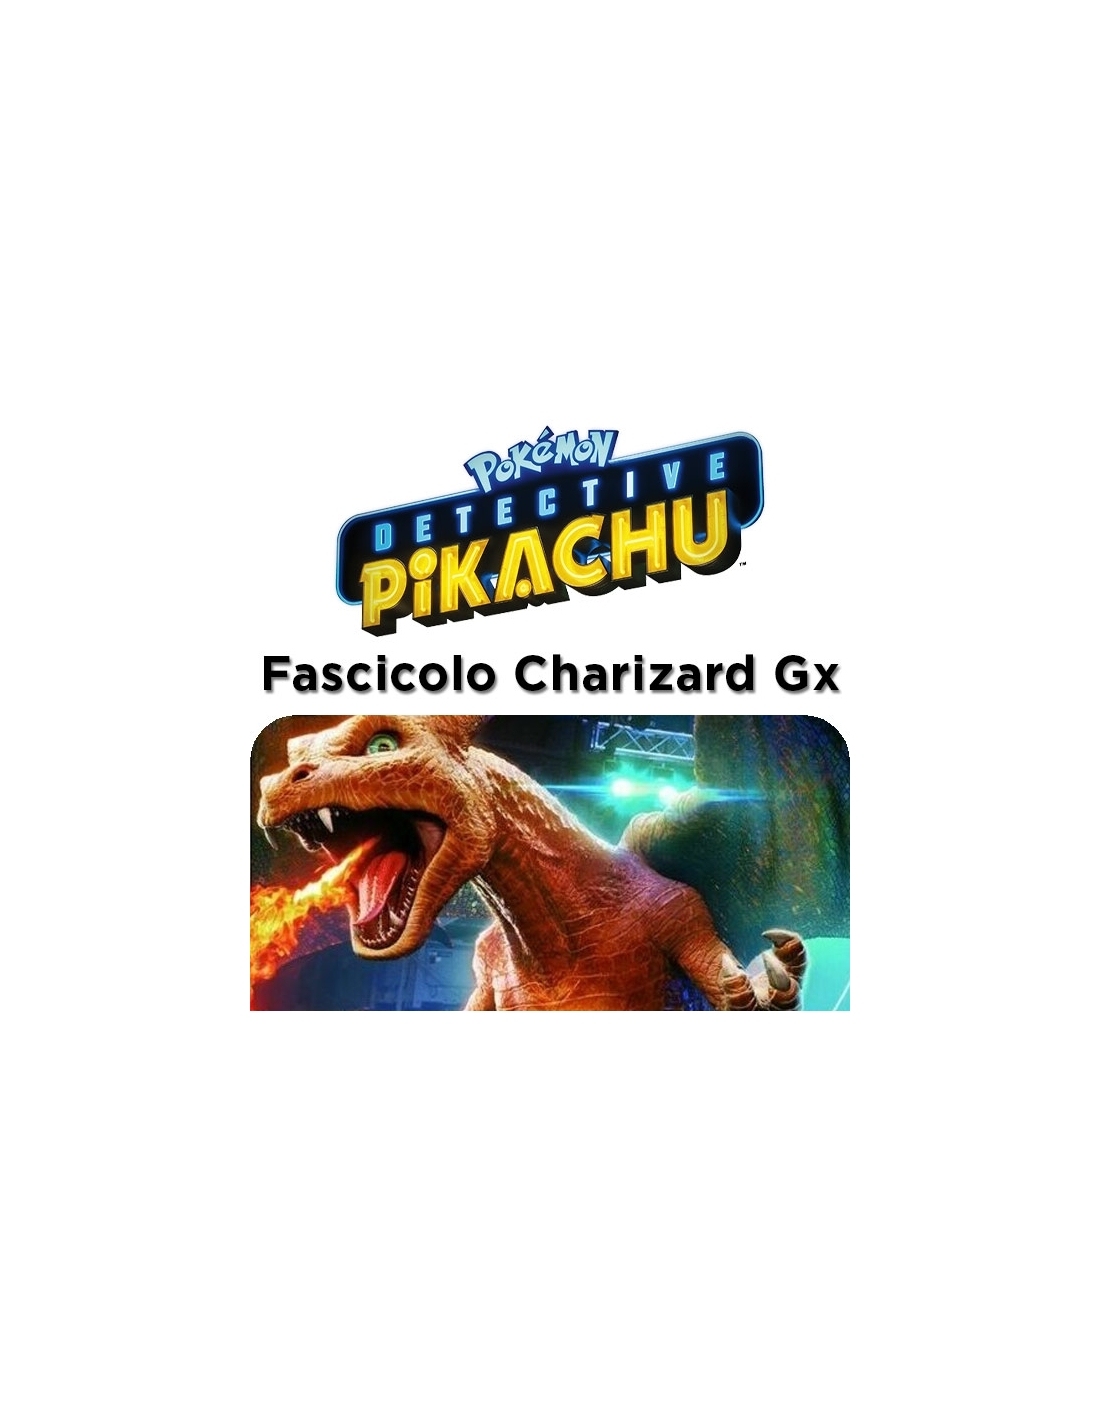 Fascicolo Charizard GX italiano Detective Pikachu Pokémon 